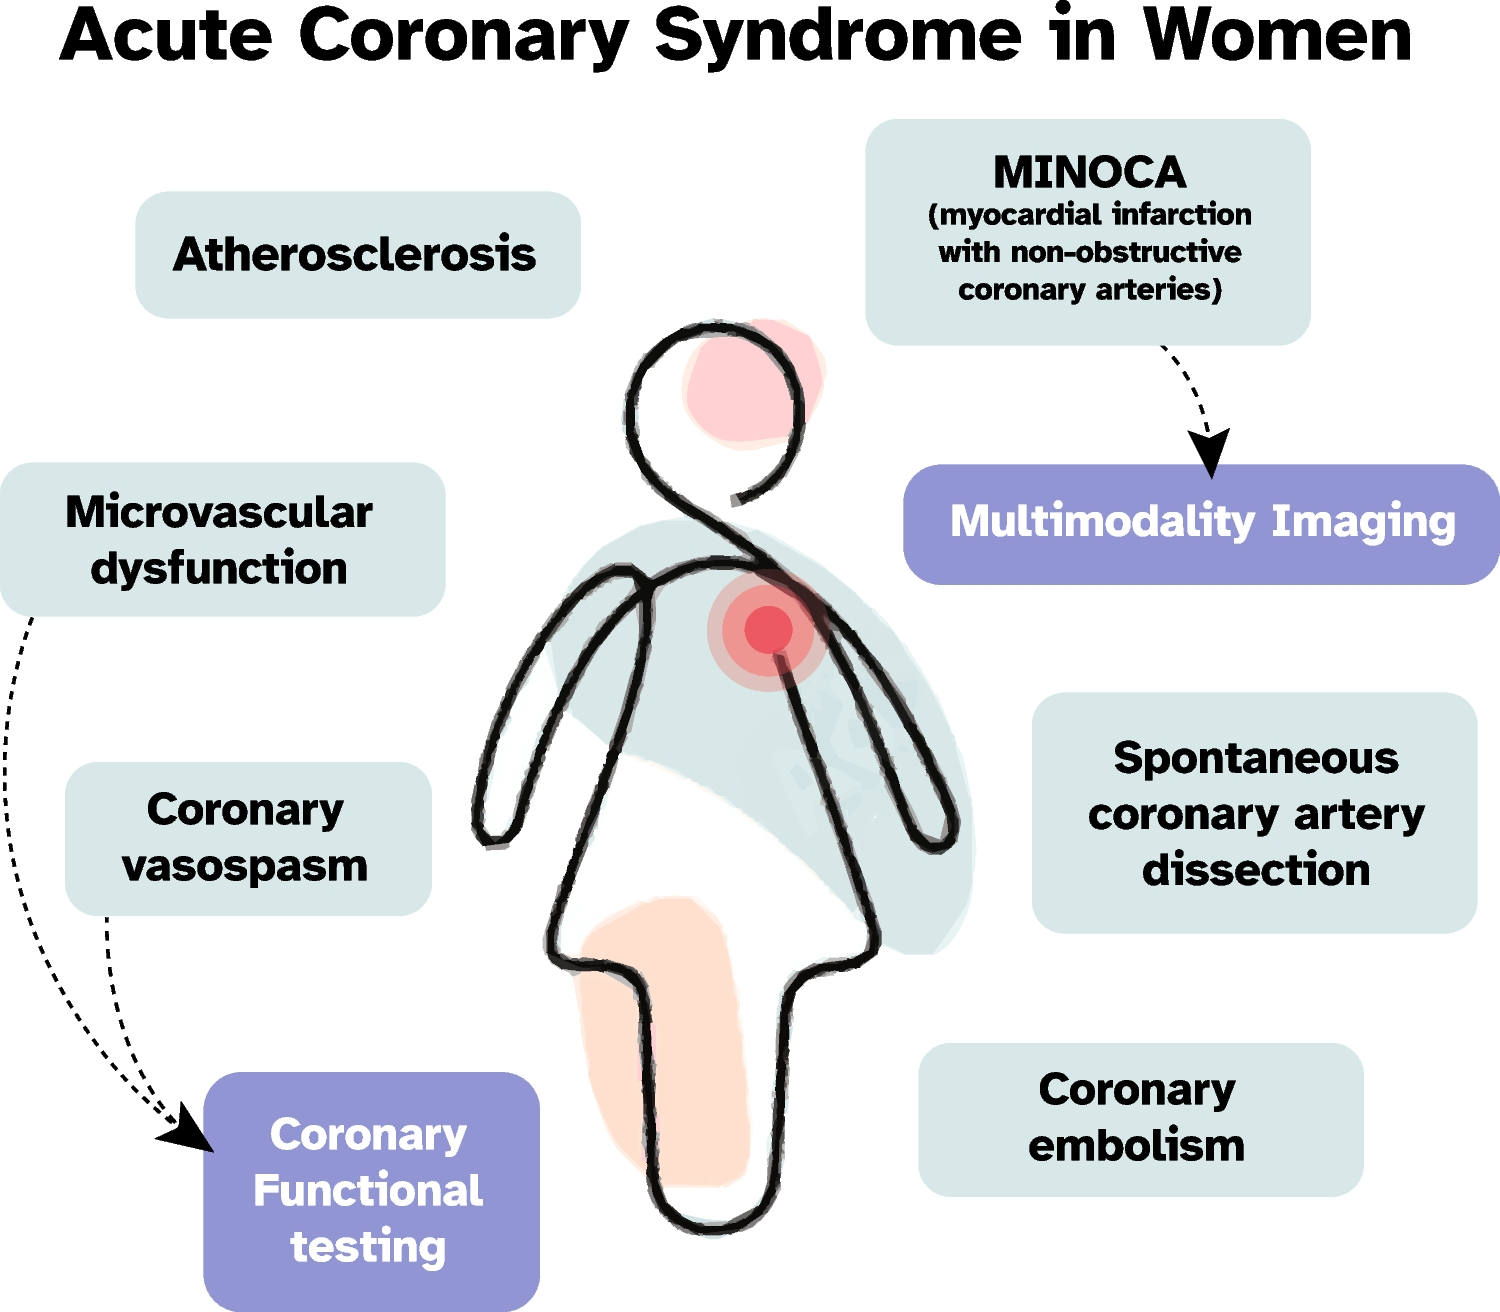 Acute Coronary Syndrome in Women: An Update